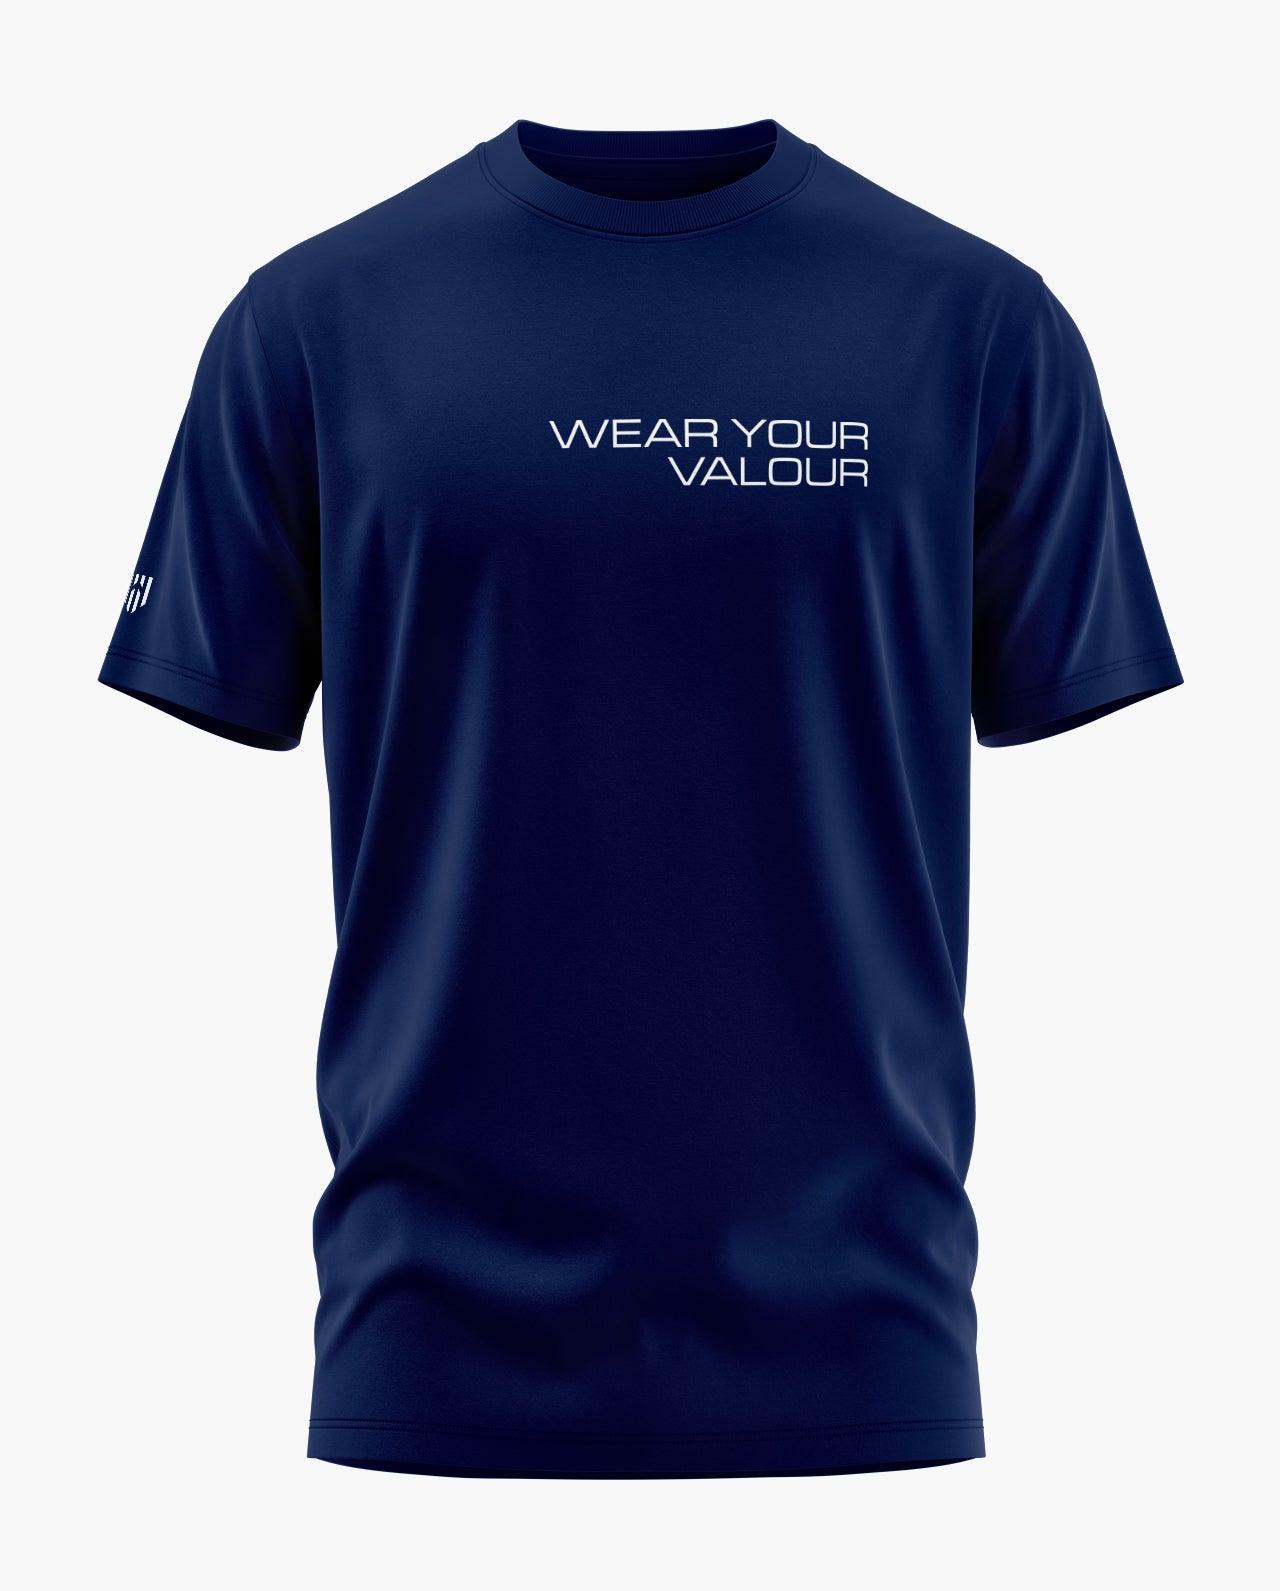 Wear Your Valour T-Shirt - Aero Armour